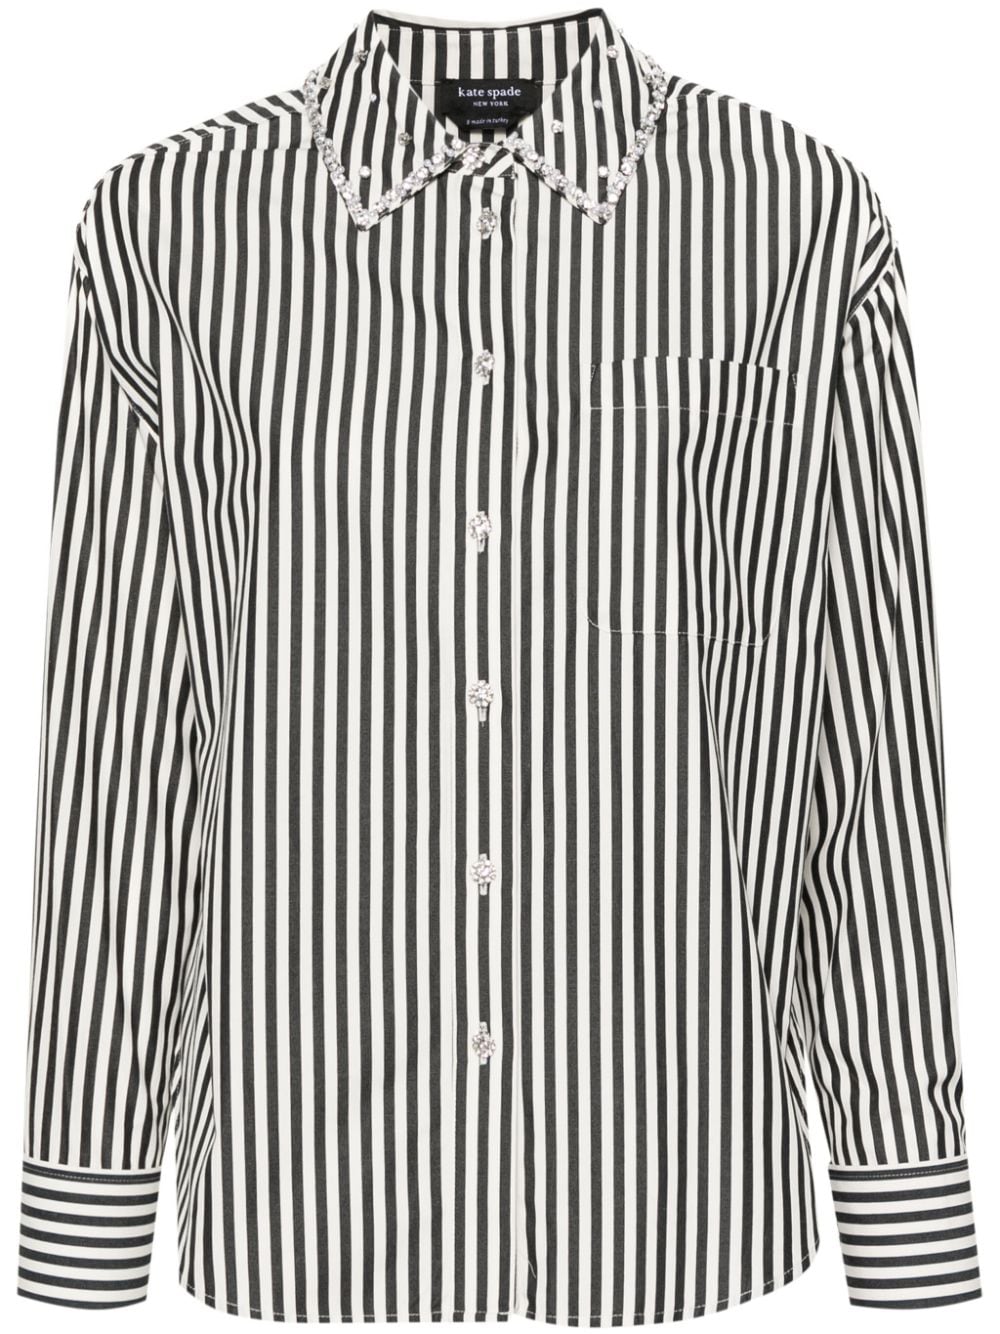 Acrobat striped shirt